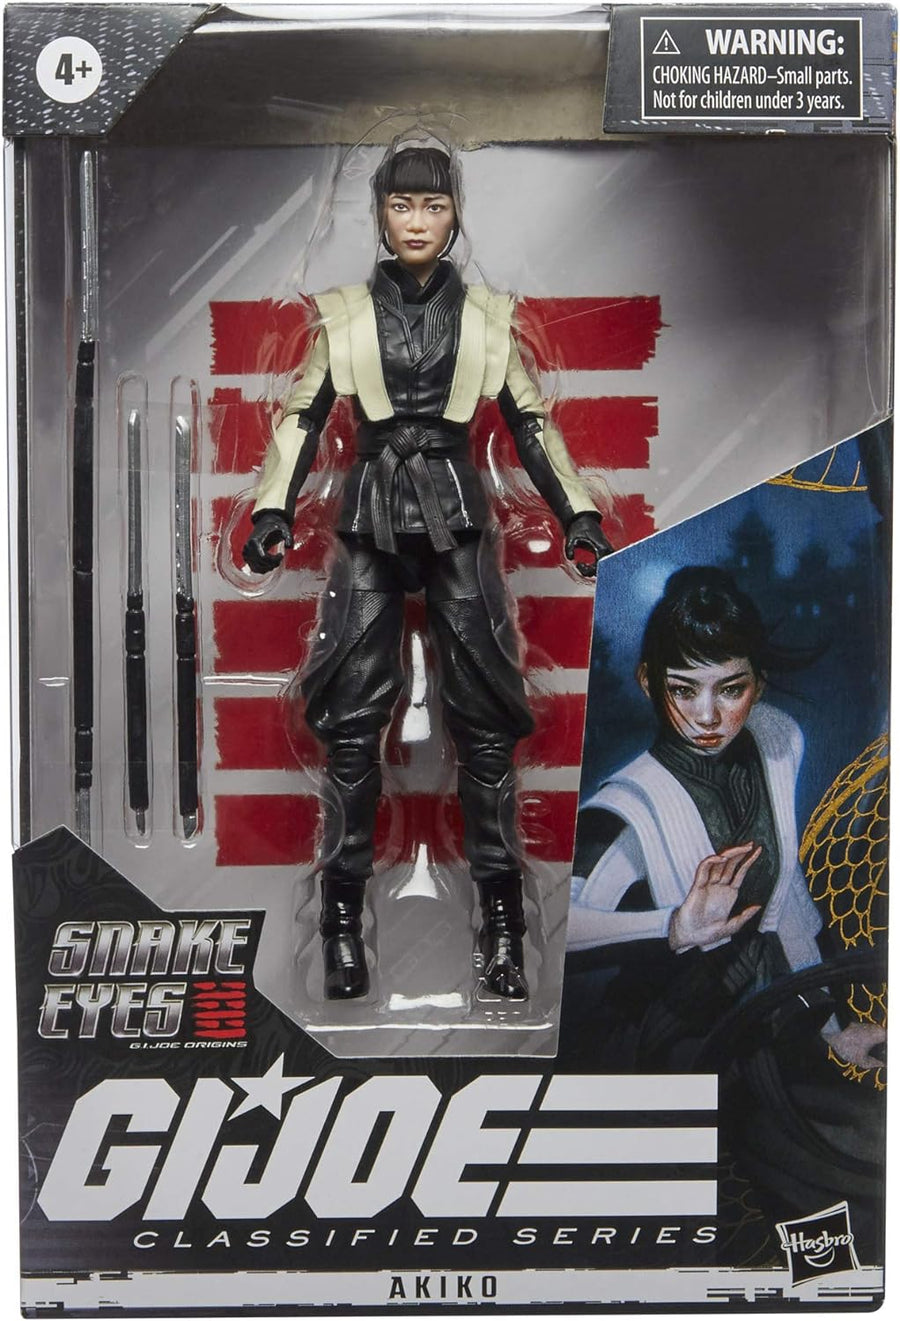 Classified Series Snake Eyes: G.I. Joe Origins Akiko Collectible Action Figure